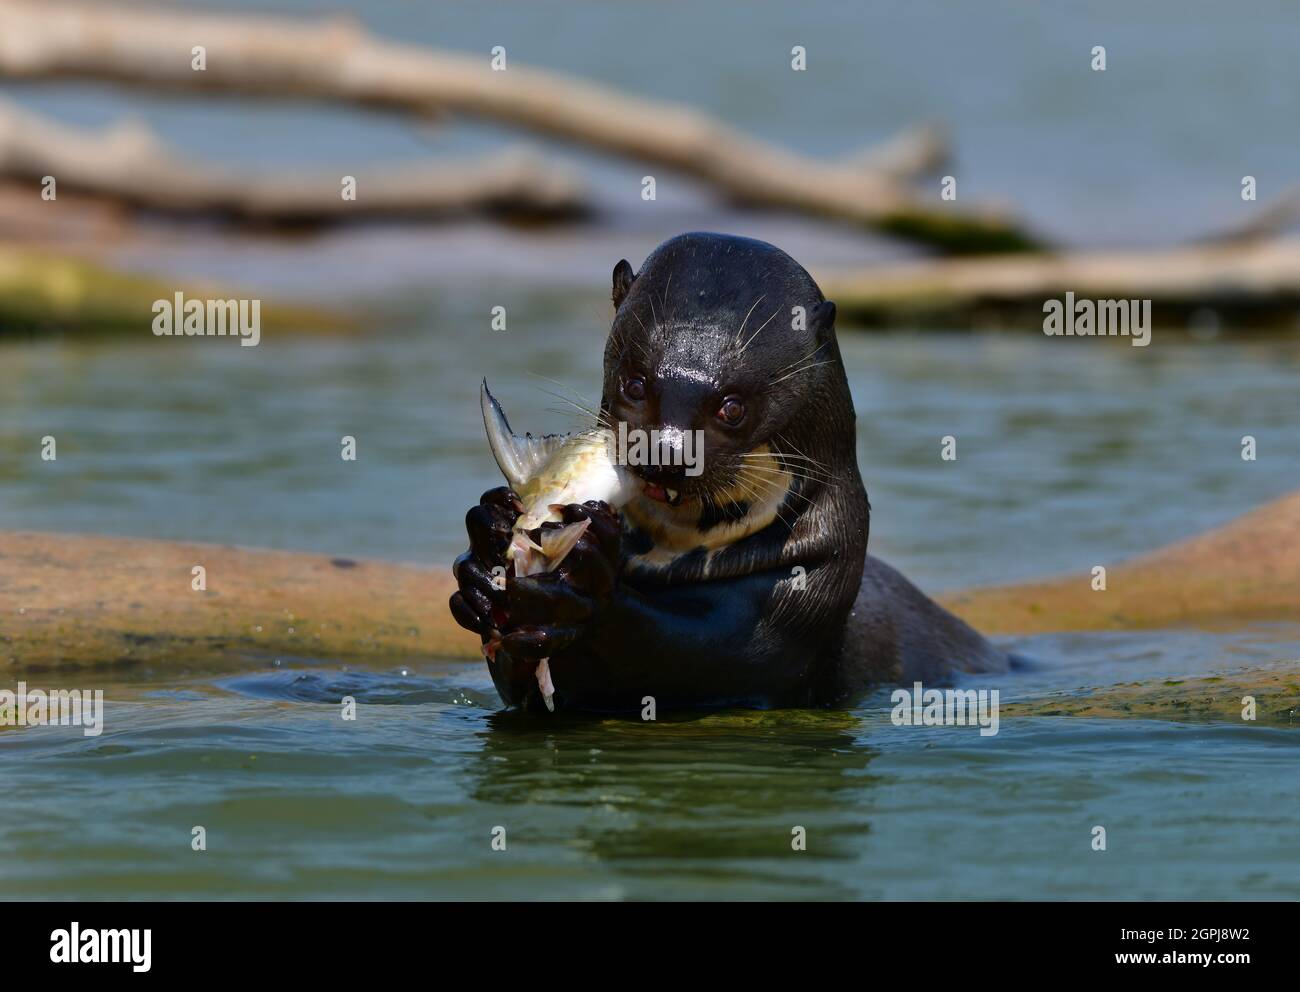 Giant river otter (Pteronura brasiliensis) eating a fish Pantanal, Brazil Stock Photo